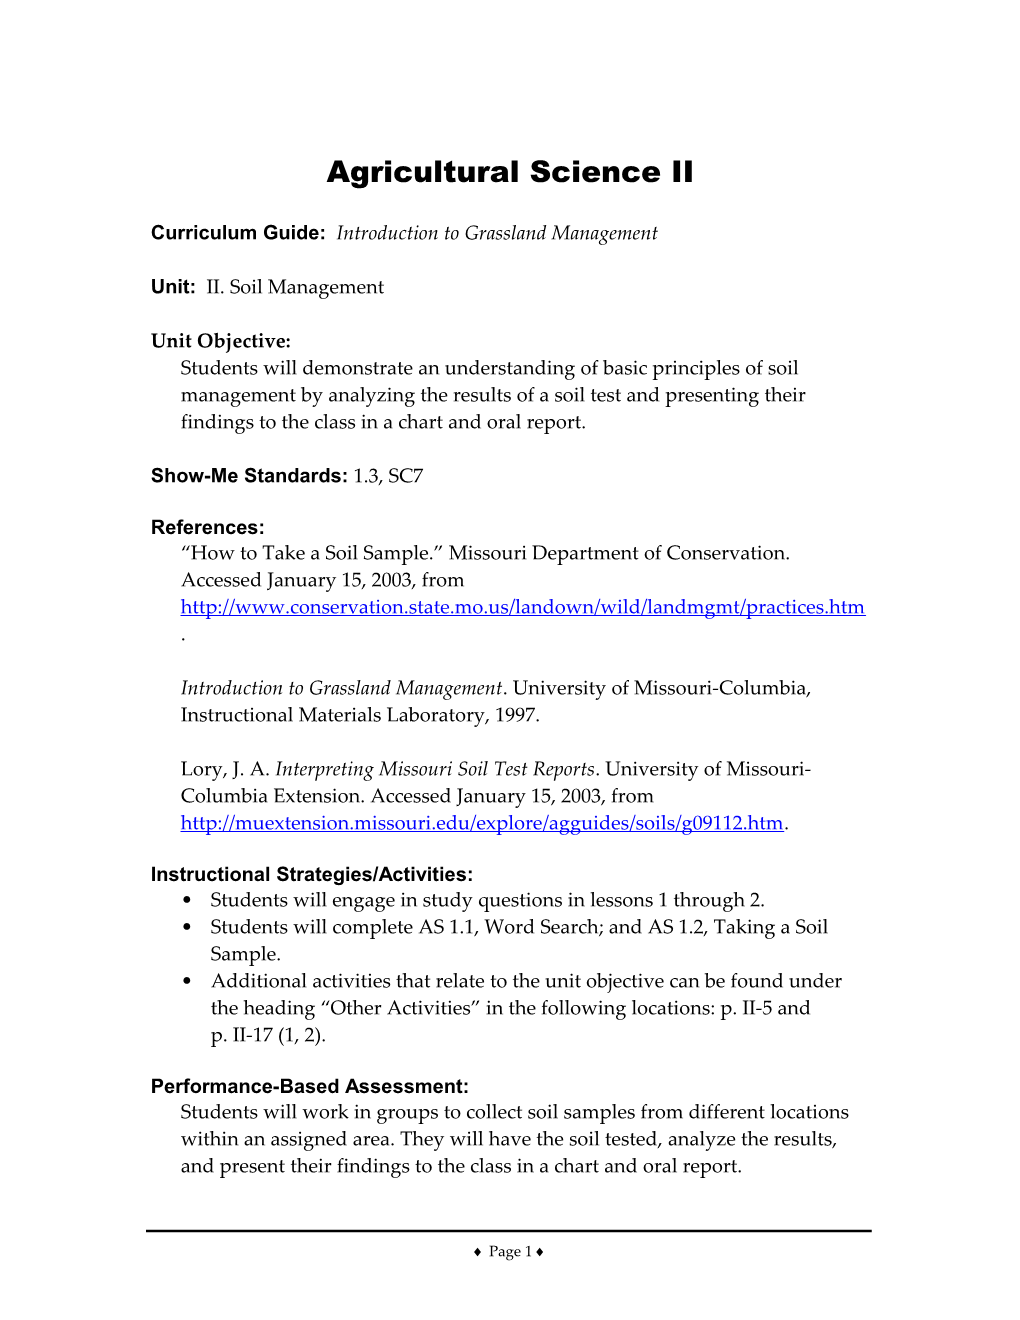 Course: Introduction to Grassland Management